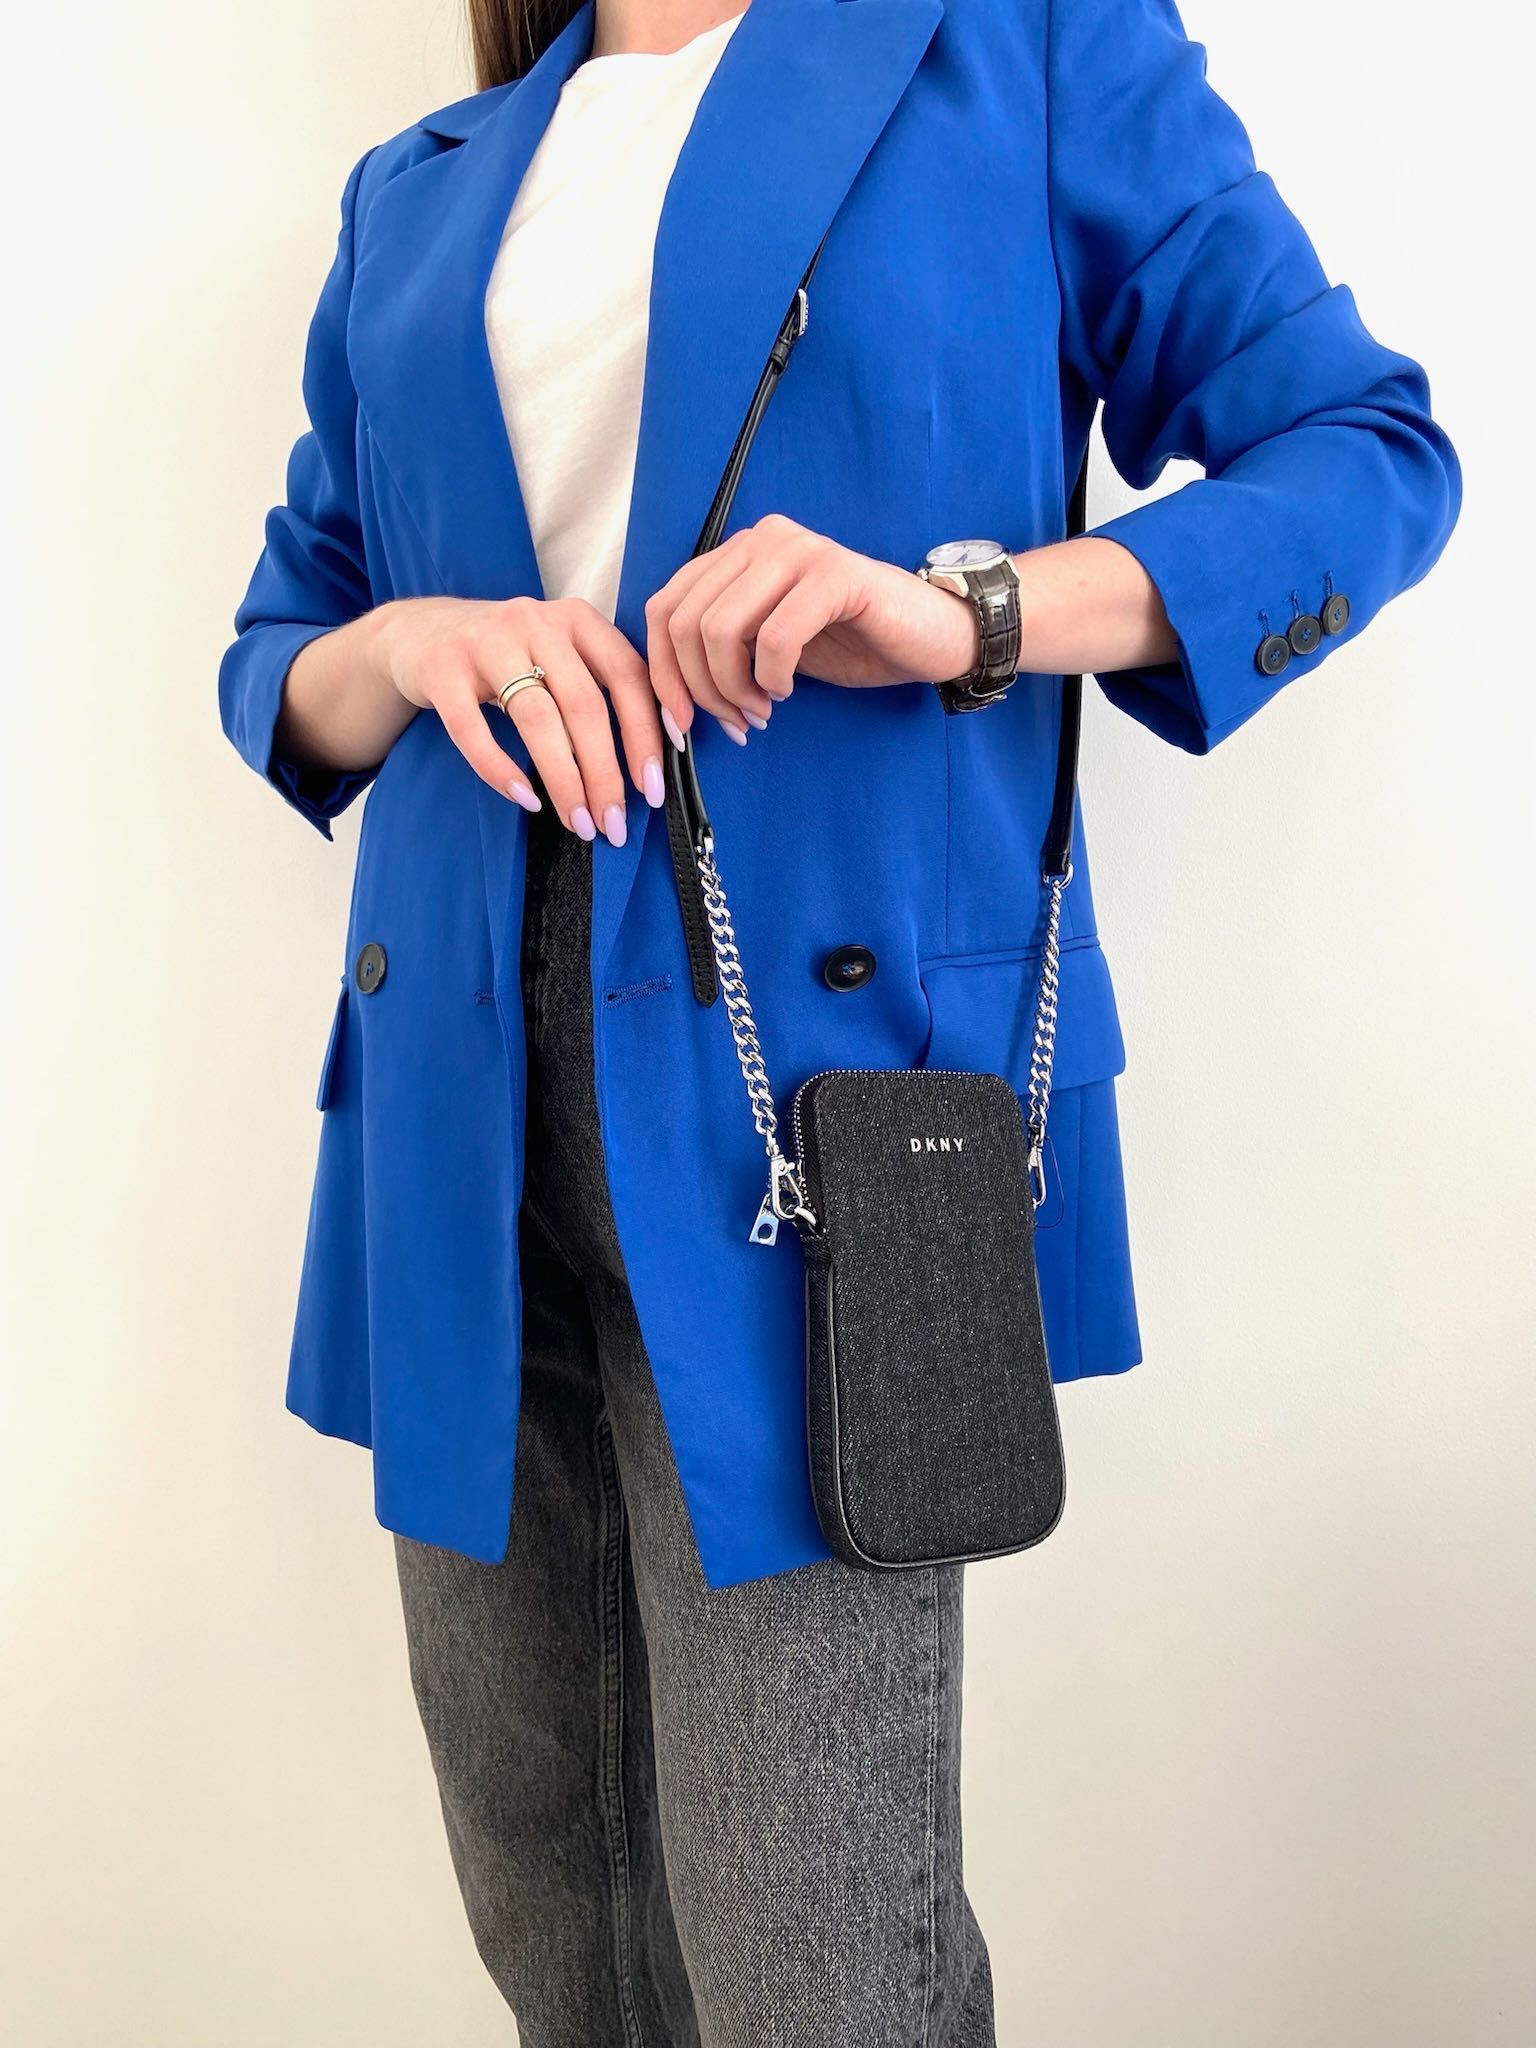 Жіноча сумочка під телефон чохол женская сумка DKNY дкну iphone